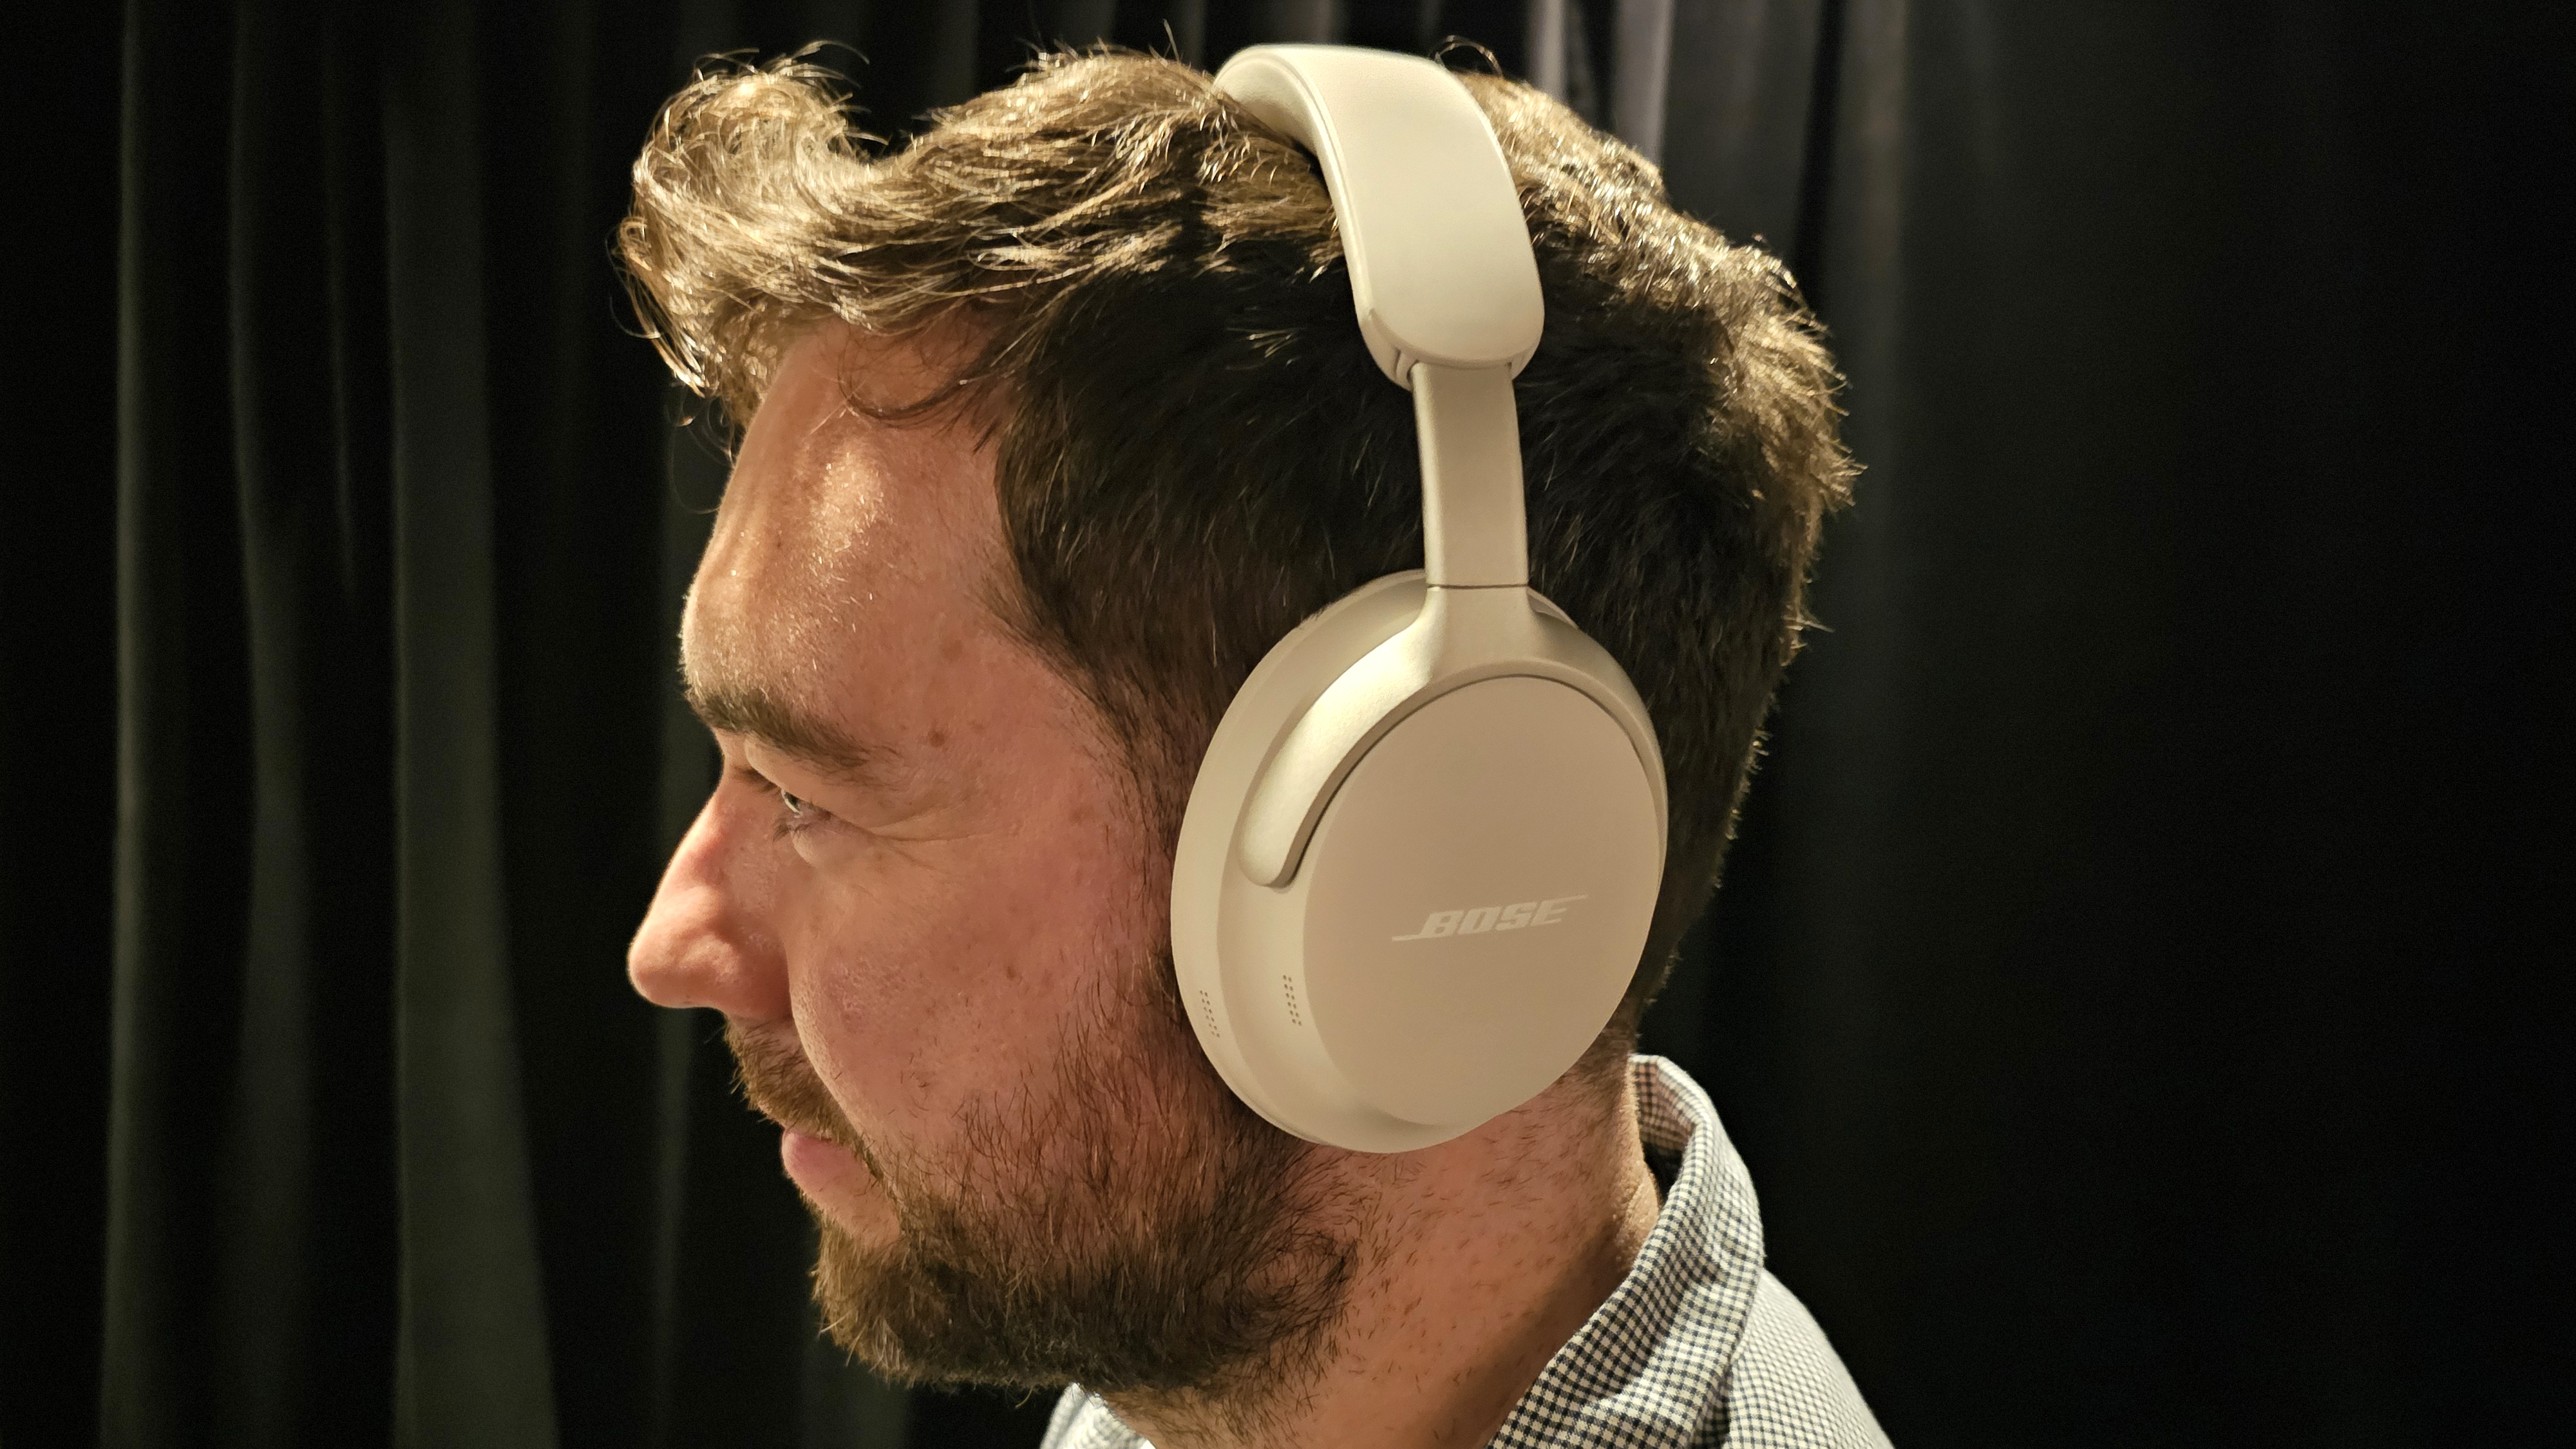 Bose QuietComfort Ultra vs. Bose 700 headphones